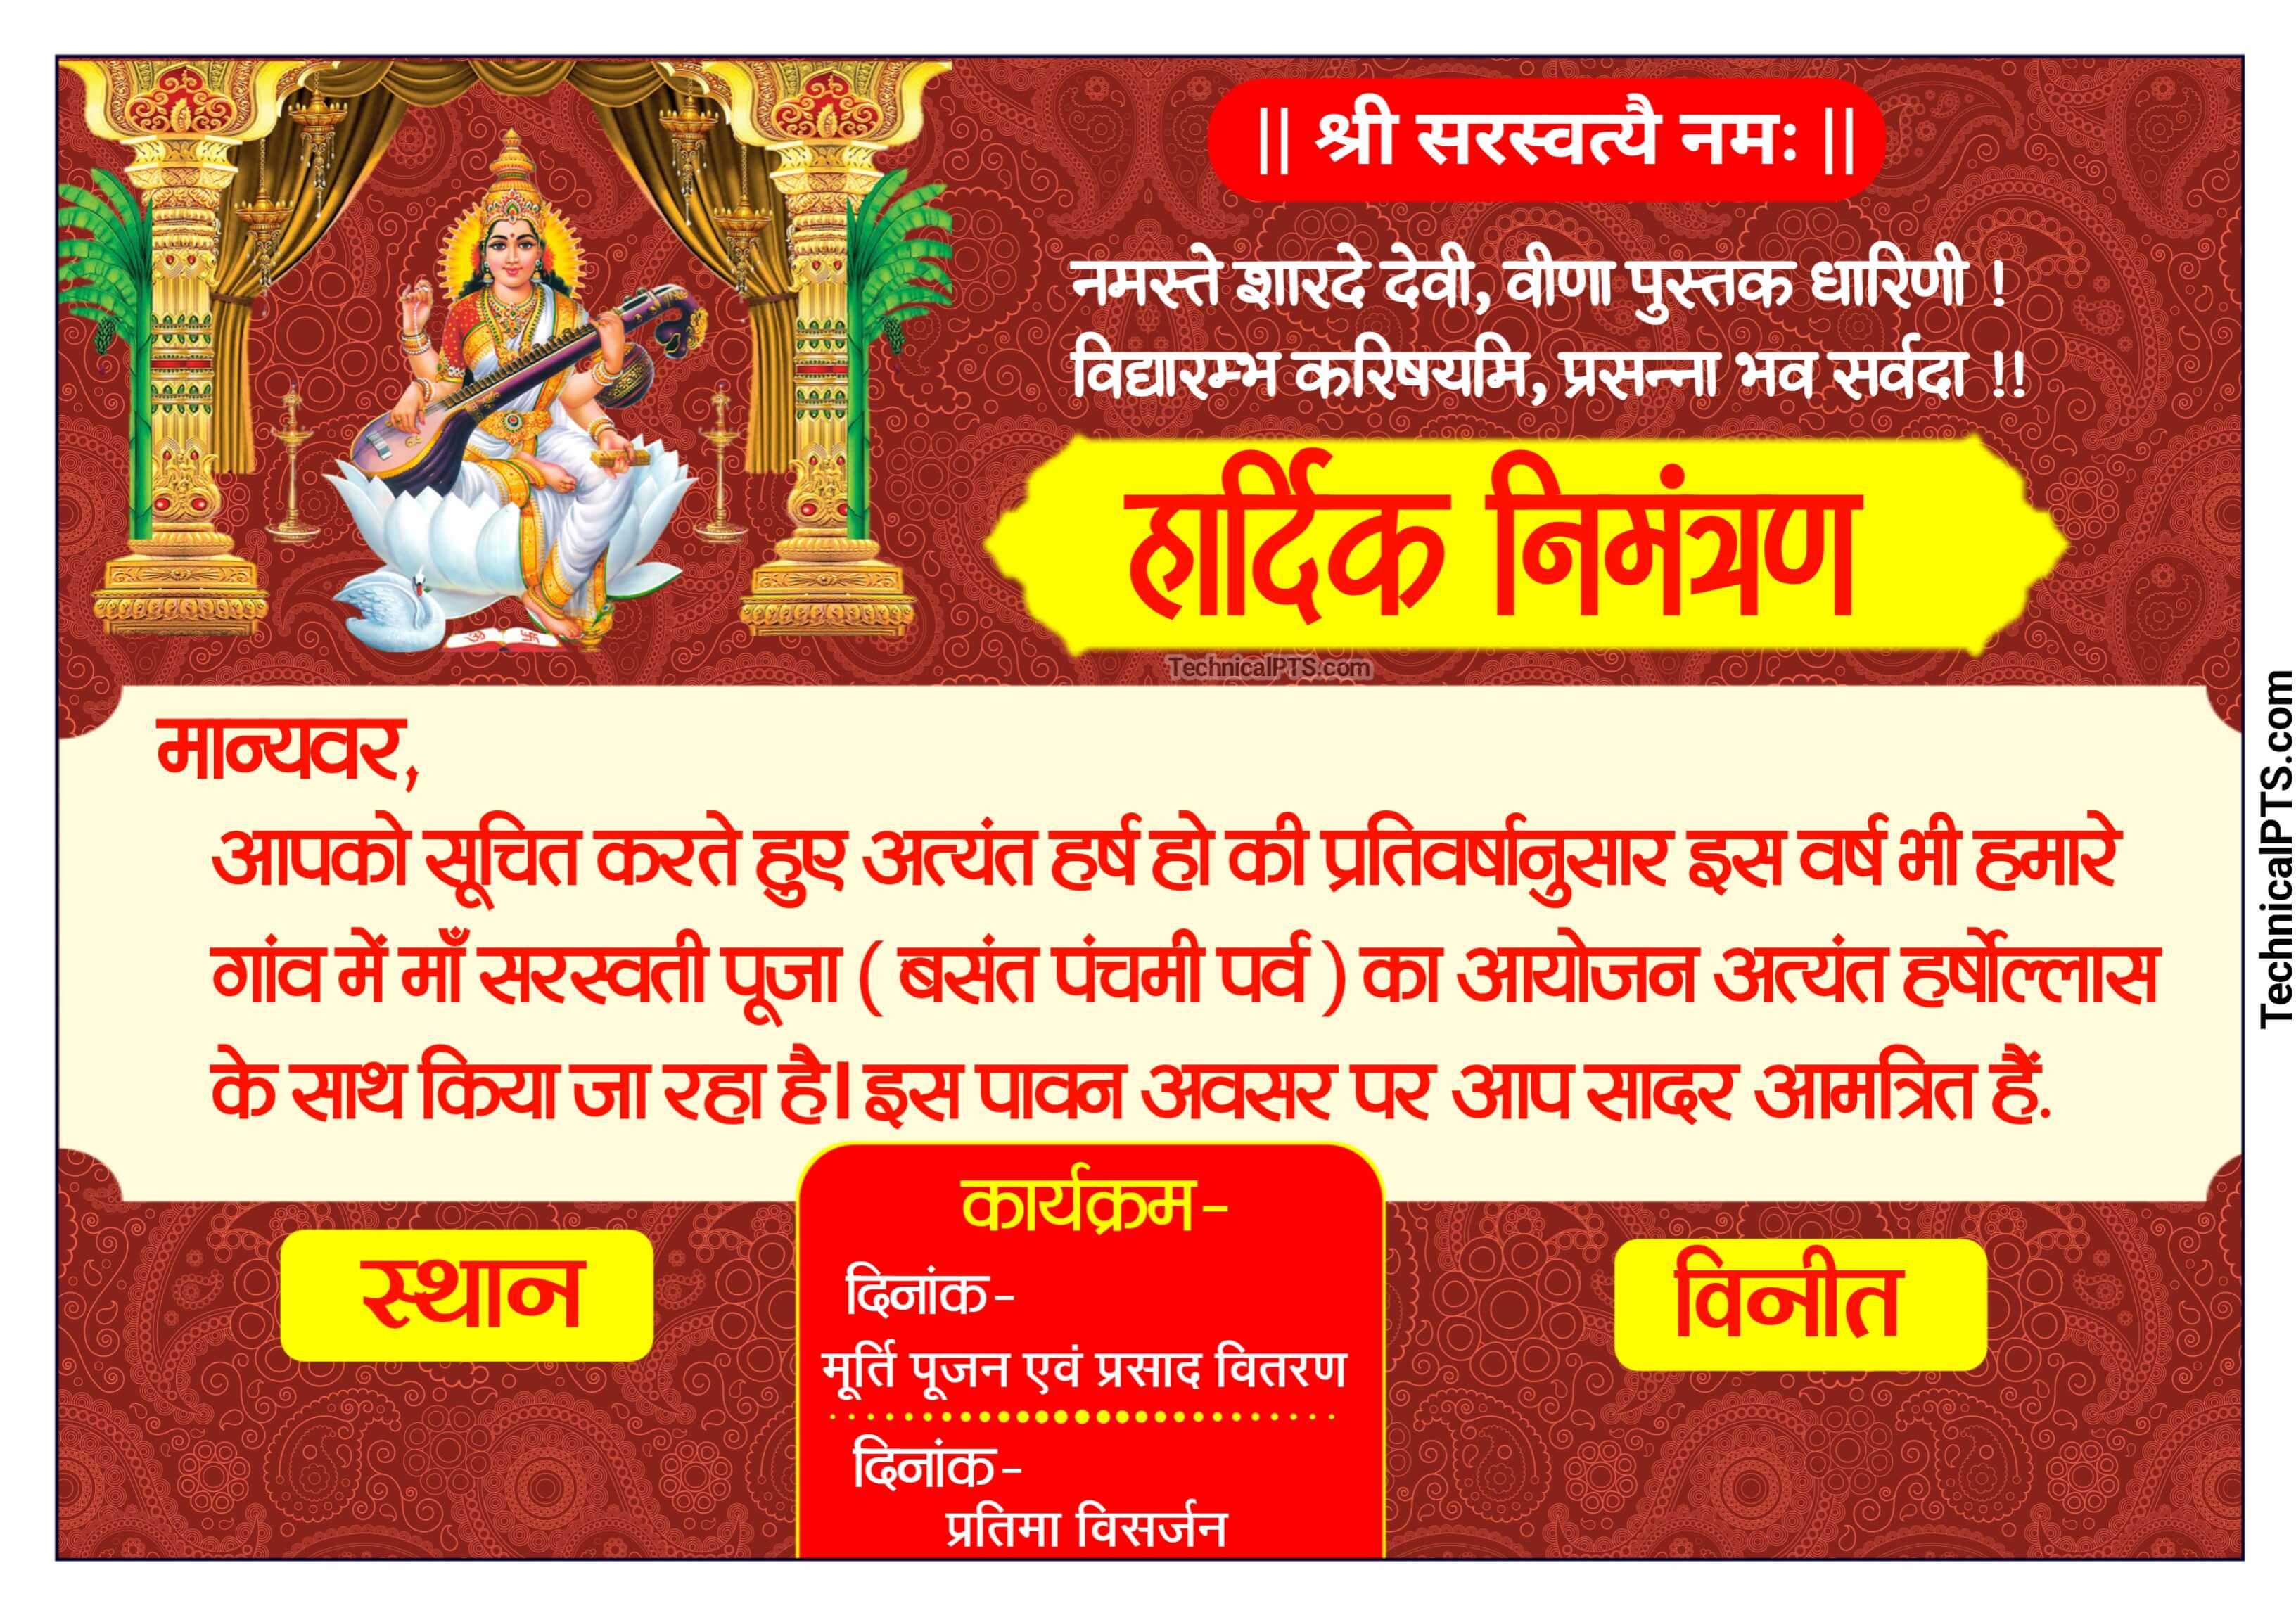 Saraswati Puja invitation card plp file download| Saraswati Puja nimantran card plp file| Saraswati Puja nimantran poster mobile se Kaise banaen